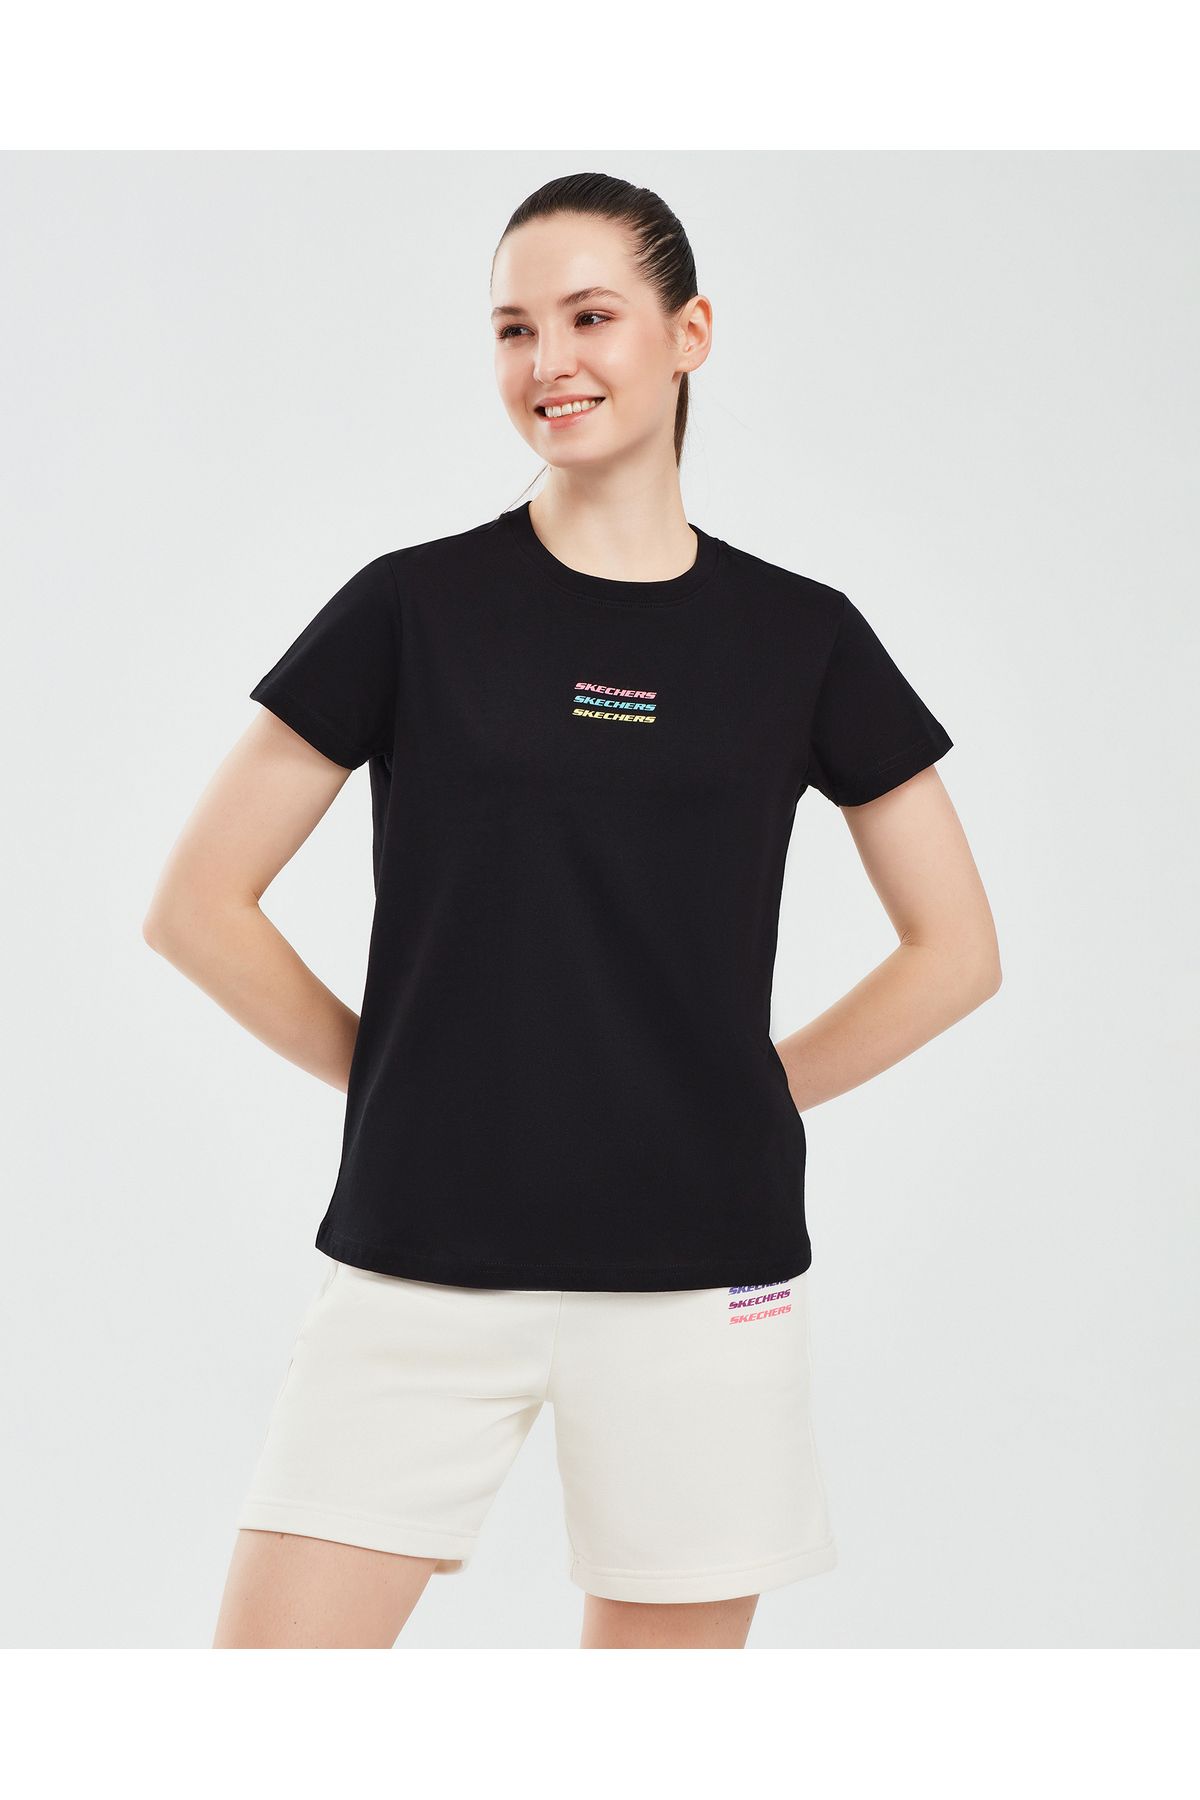 Skechers Essential W Short Sleeve T-shirt Kadın Siyah Tshirt S241006-001